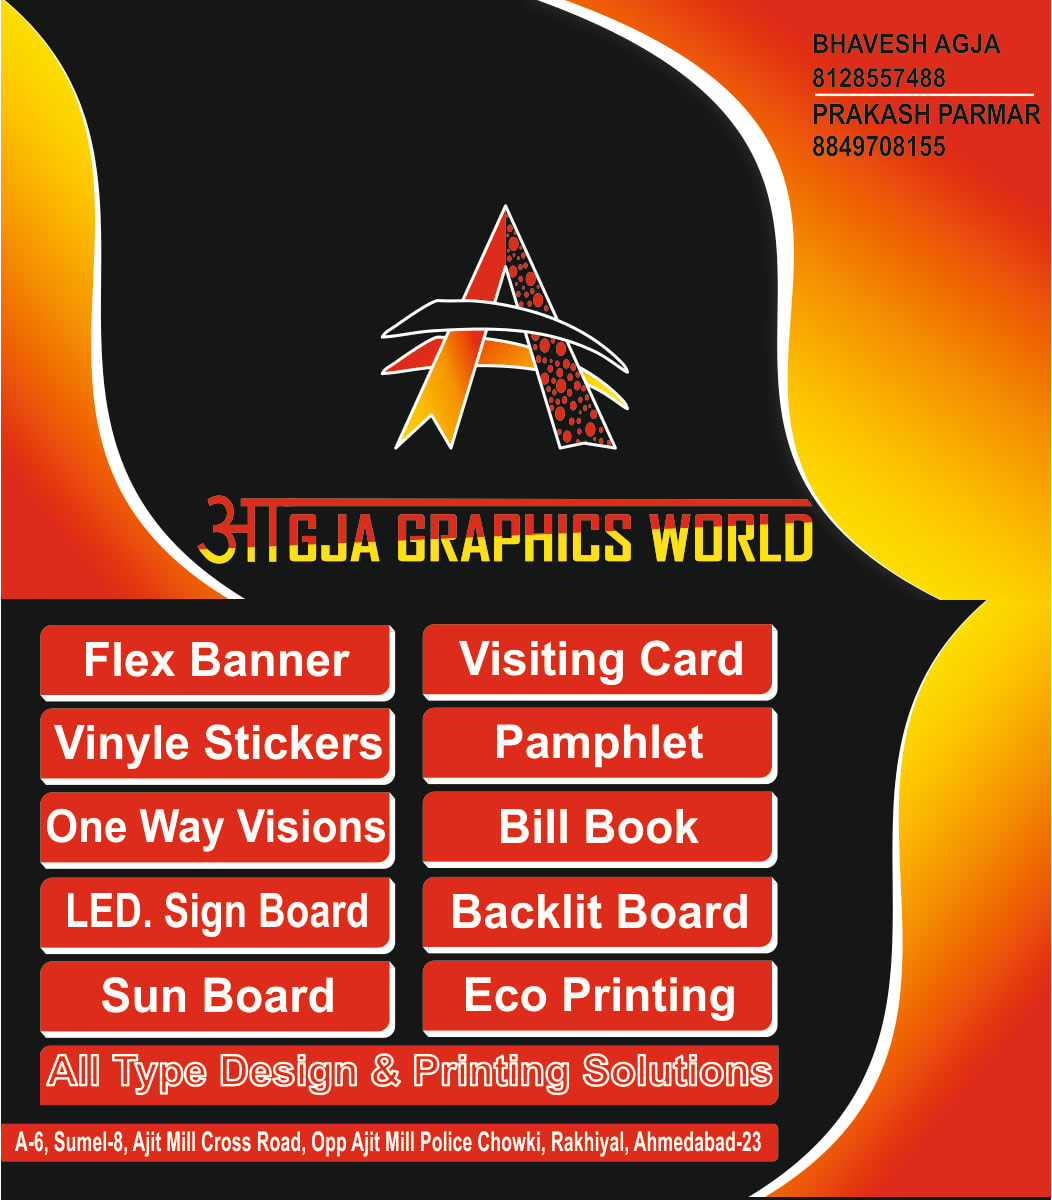 Logo Design Company Ahmedabad | Corporate Stationery Design